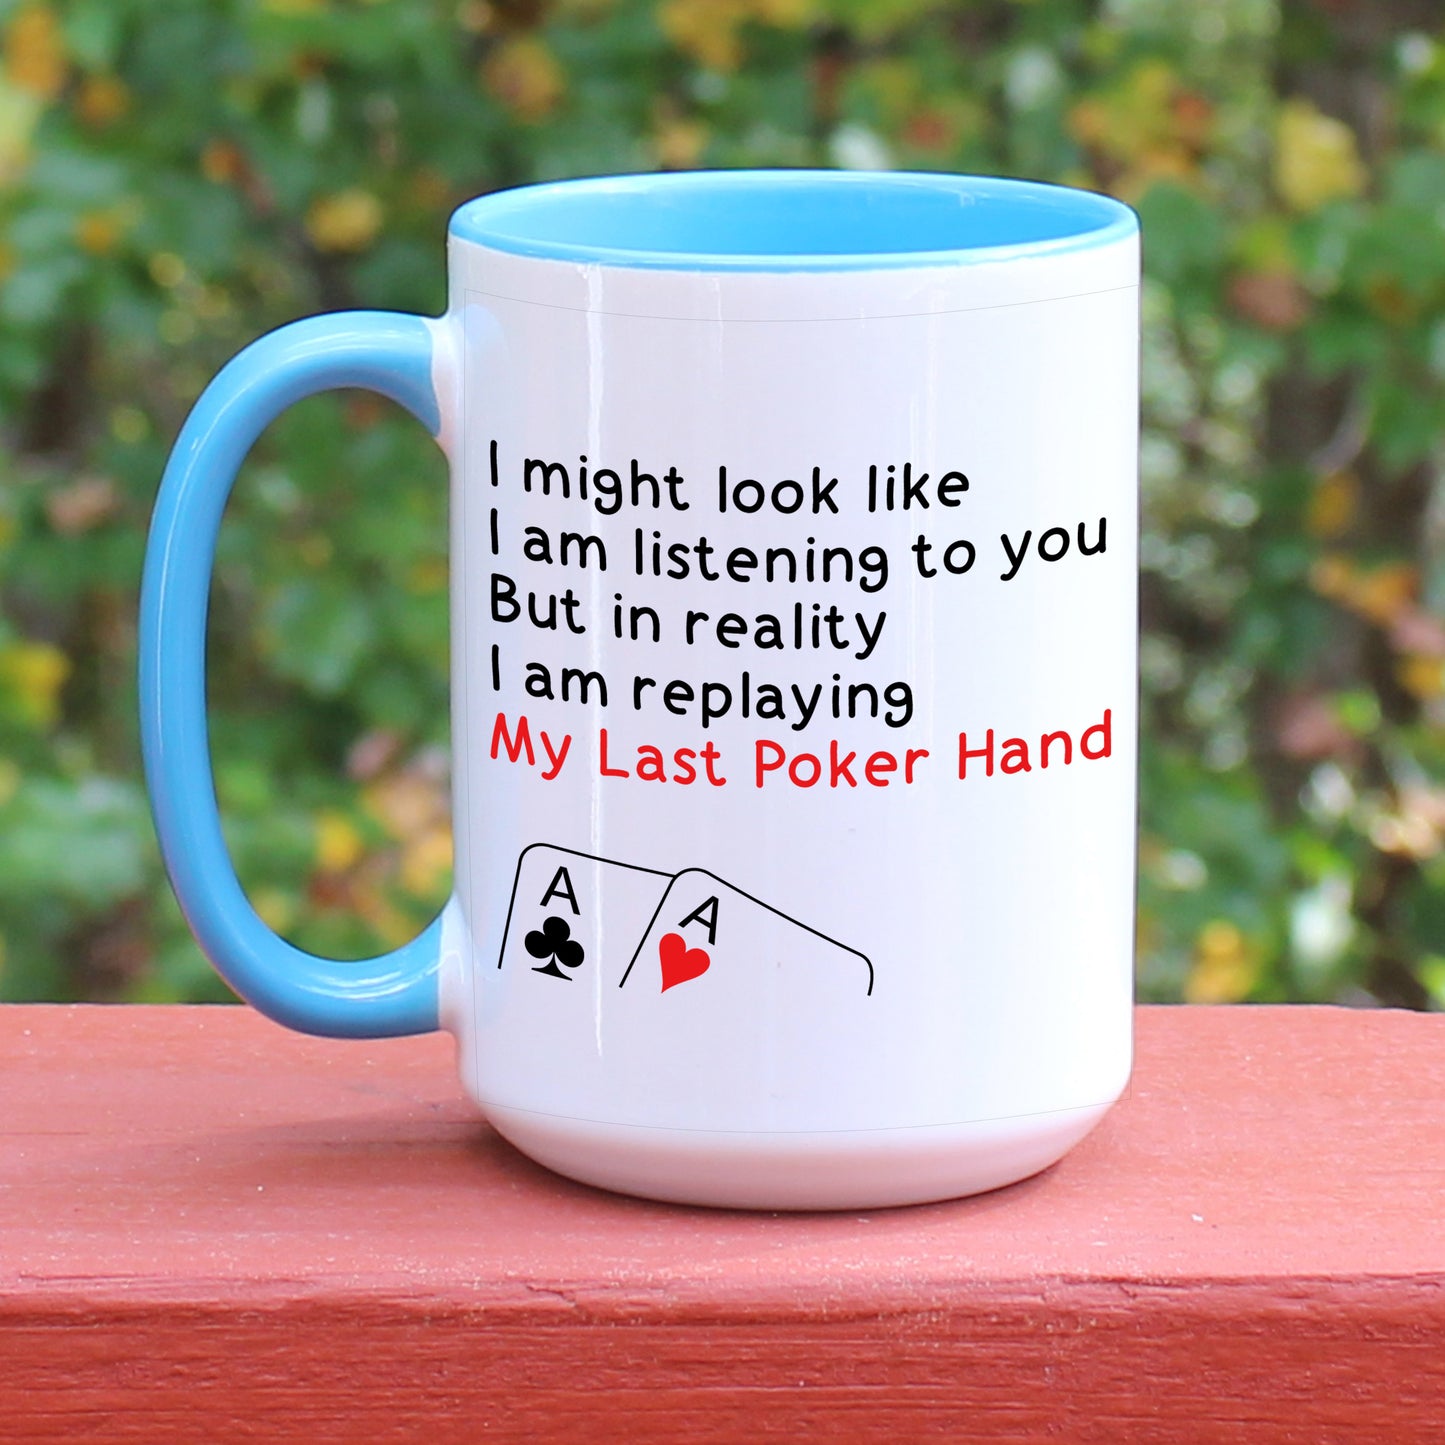 Poker mug on blue accent mug